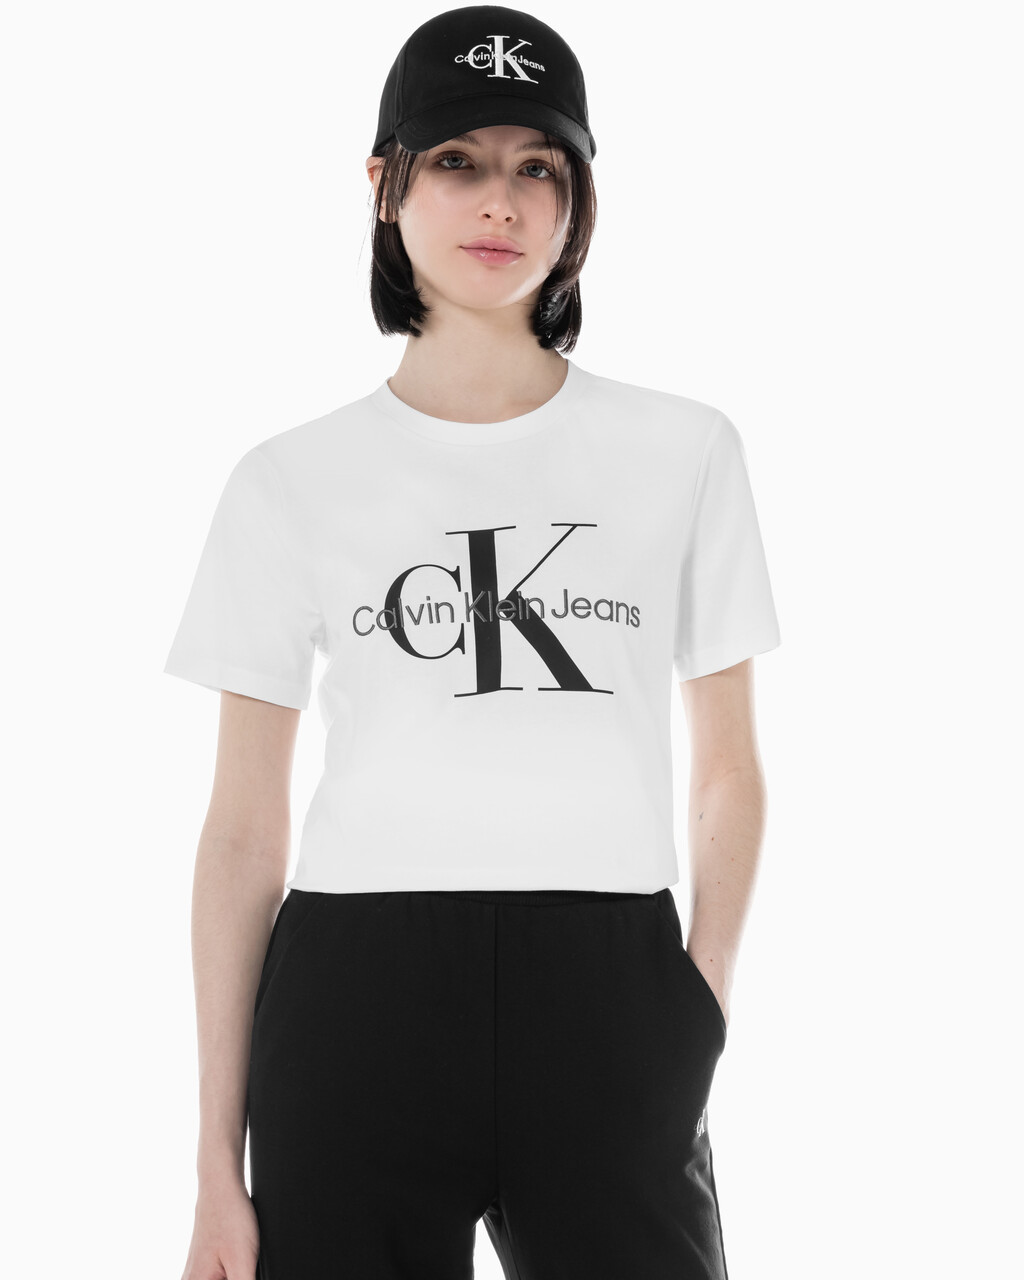 Buy 여성 스트레이트핏 모노그램로고 크루넥 반팔 티셔츠 in color BRIGHT WHITE